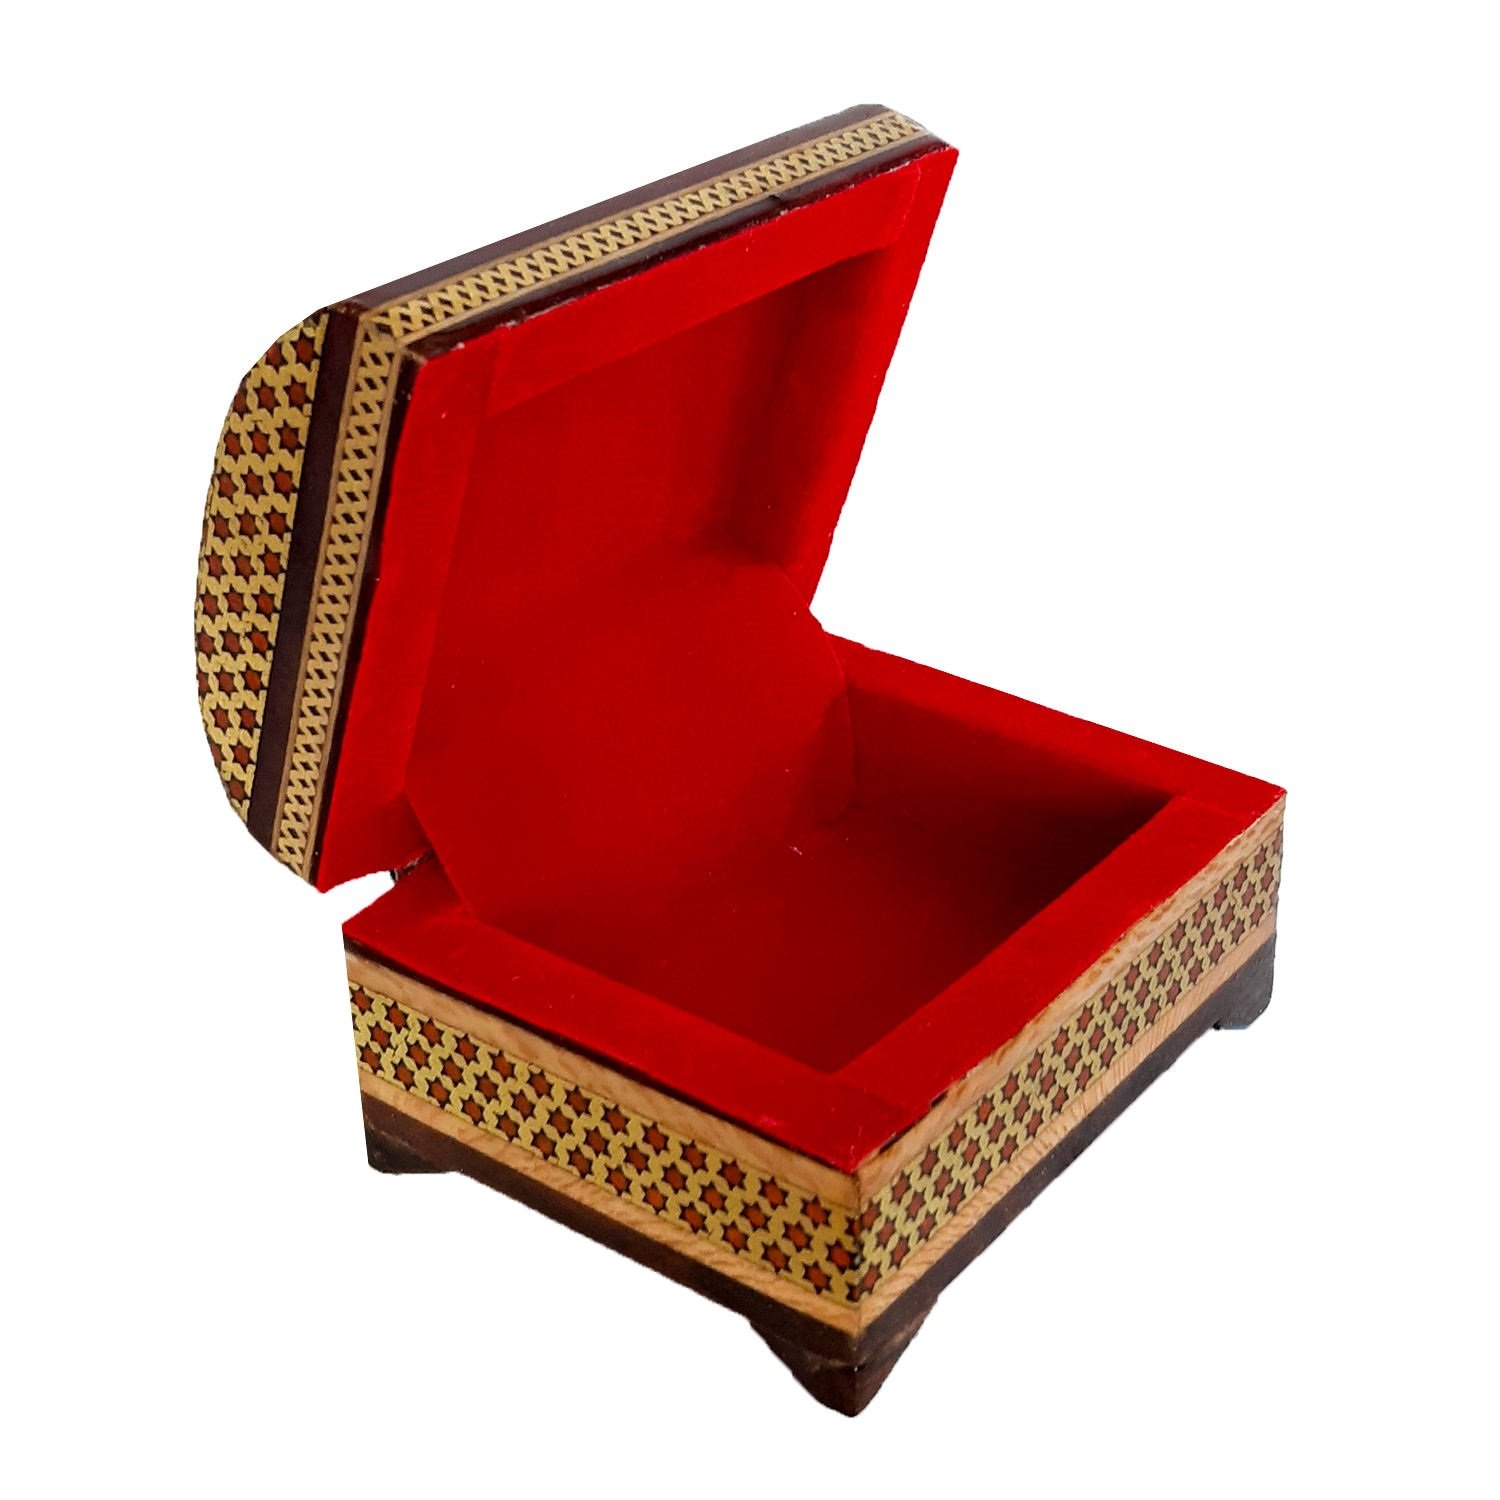 Khatam Jewelry box Model Shishi Code 176 , Khatam box, Inlaid, Khatam Jewelry box, Khatam